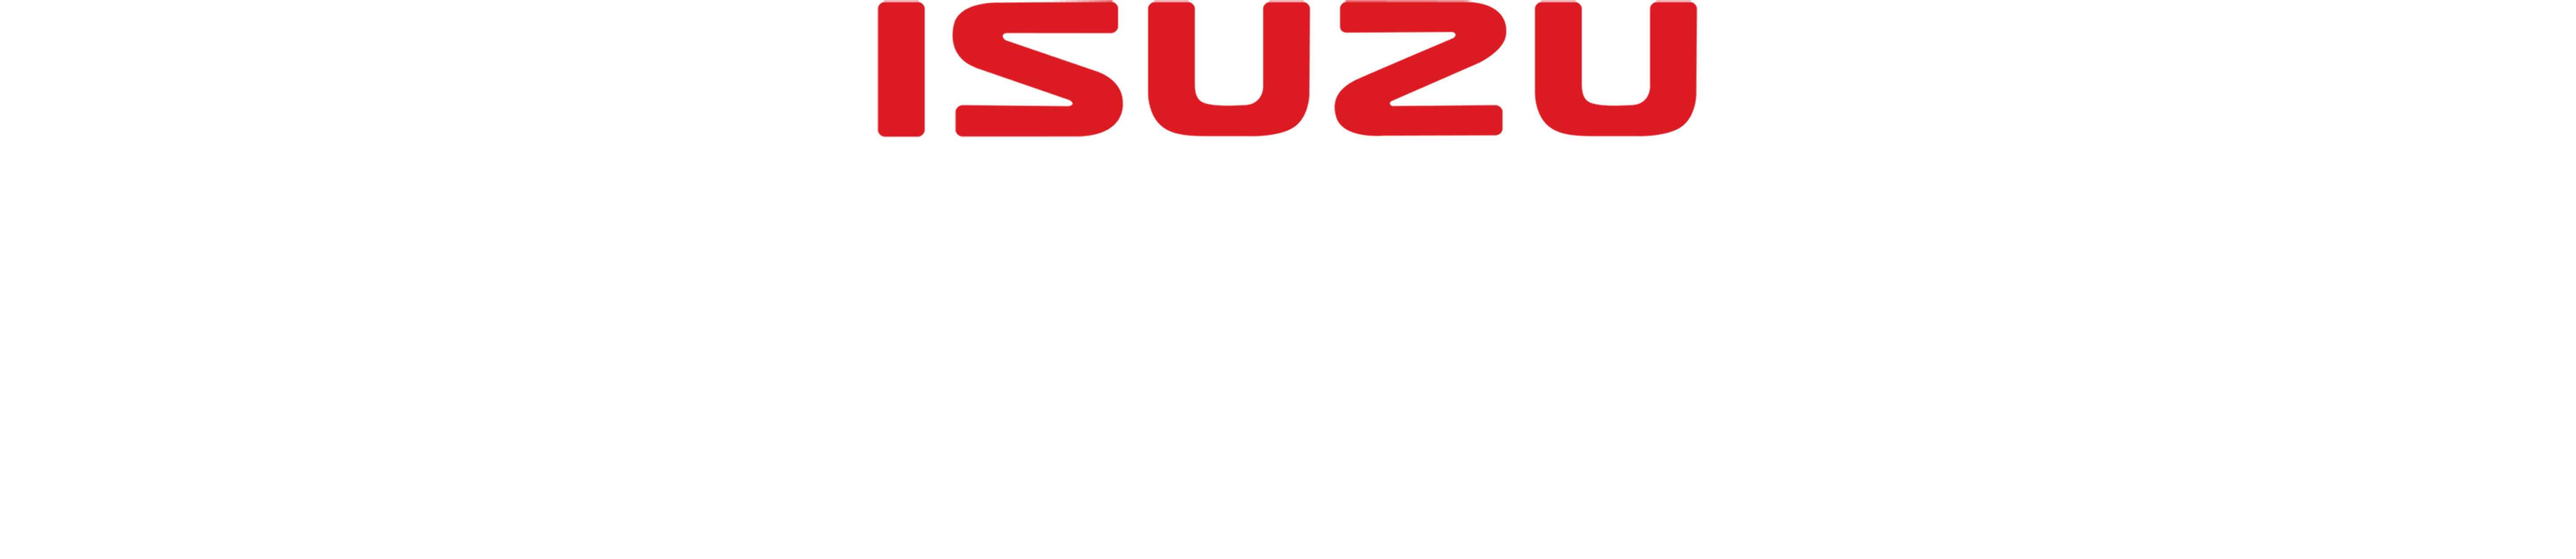 C&E Series logo